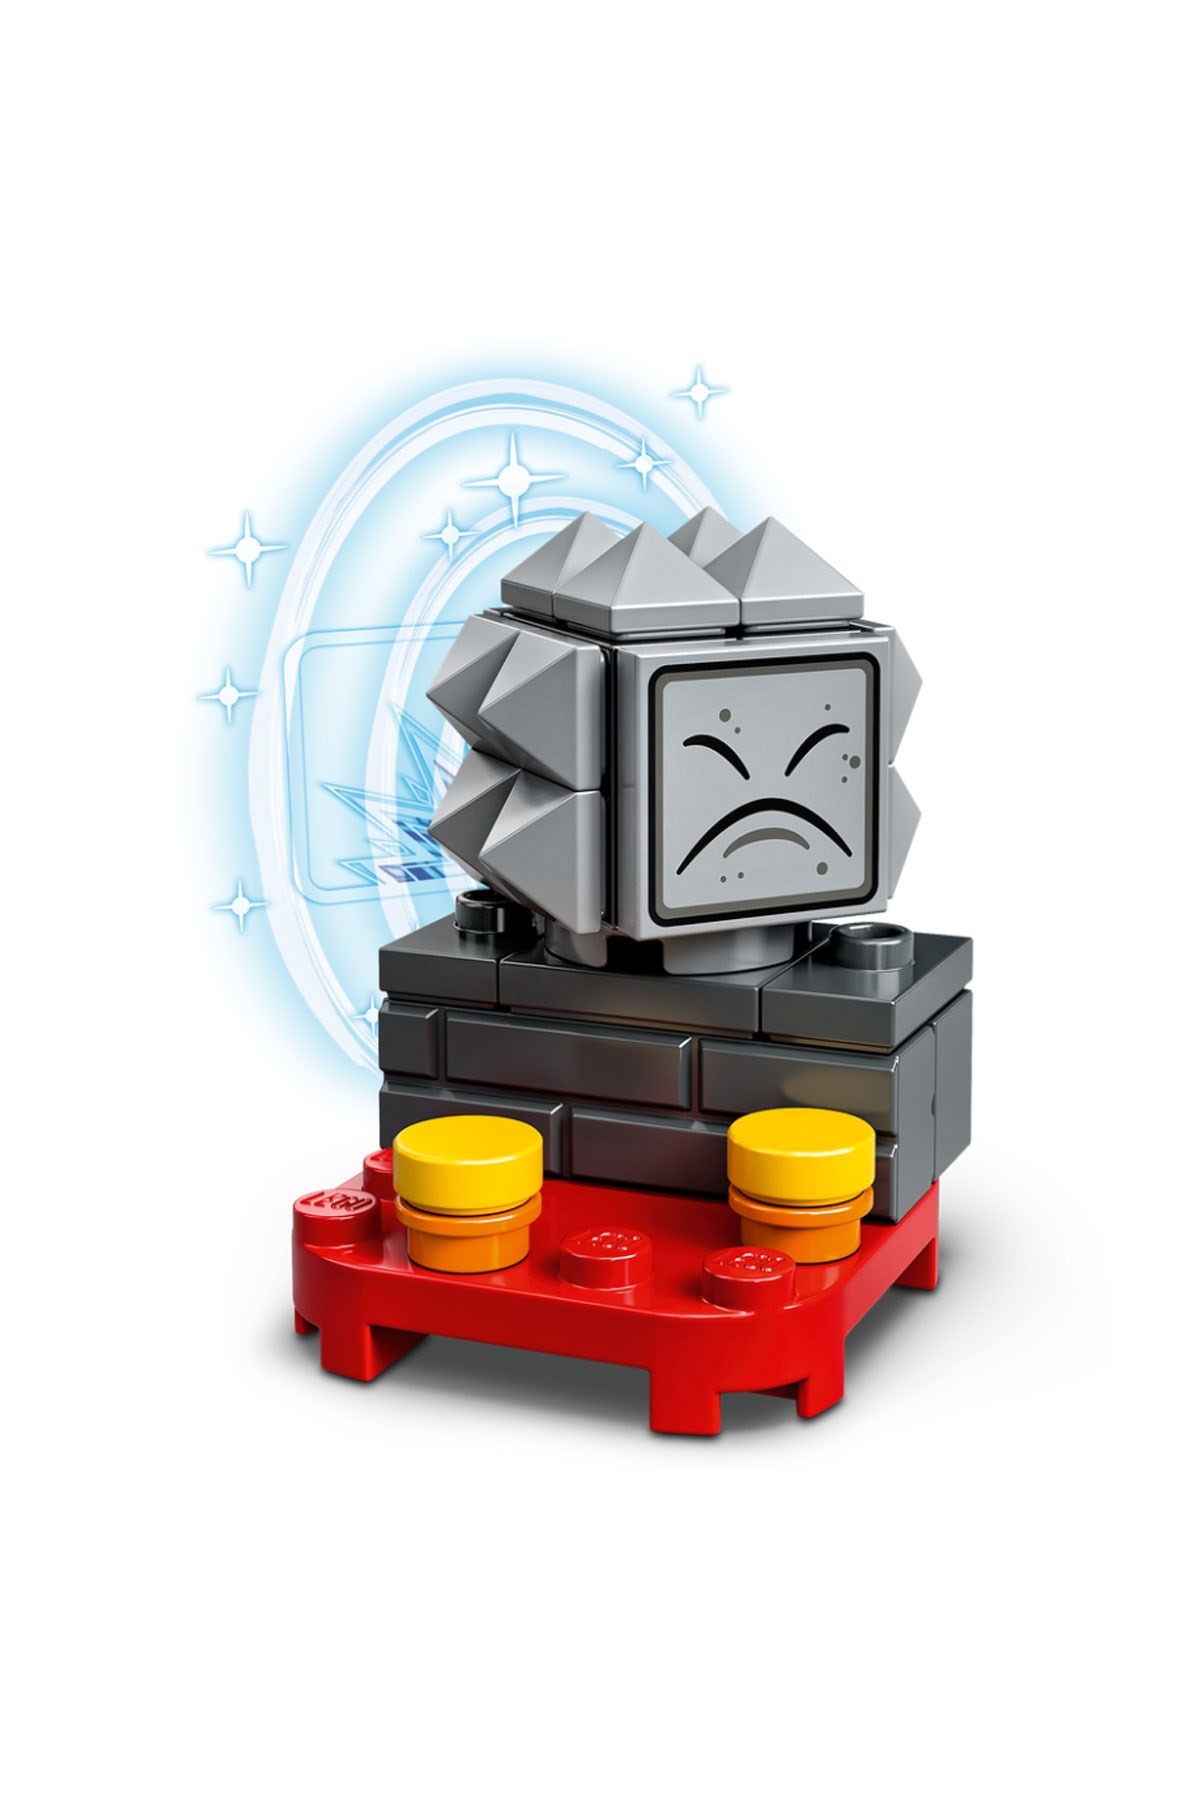 Lego Super Mario Karakterler Sürpriz Paket